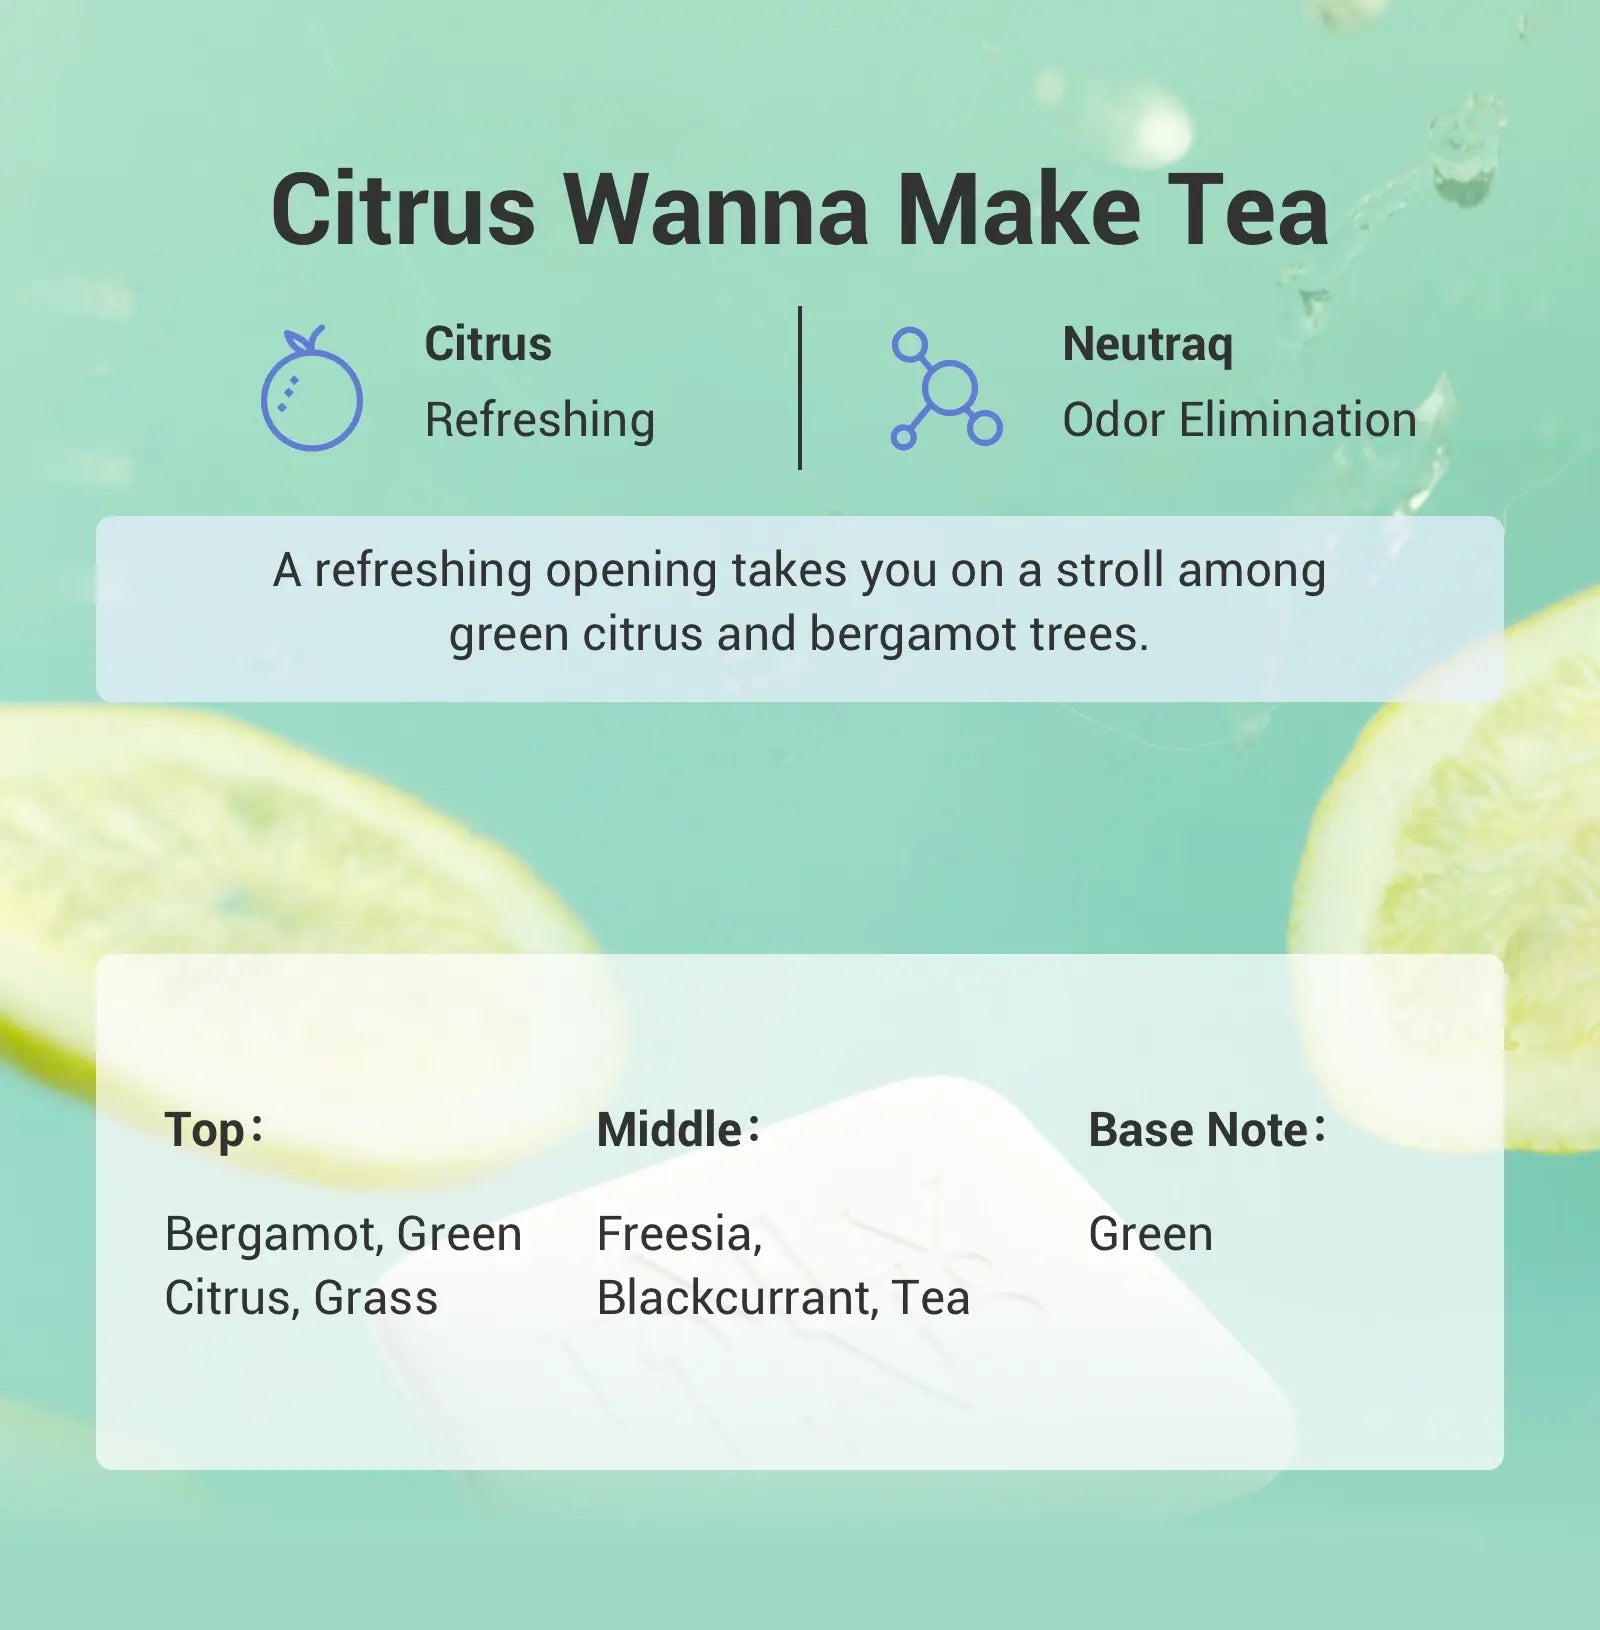 Citrus Wanna Make Tea